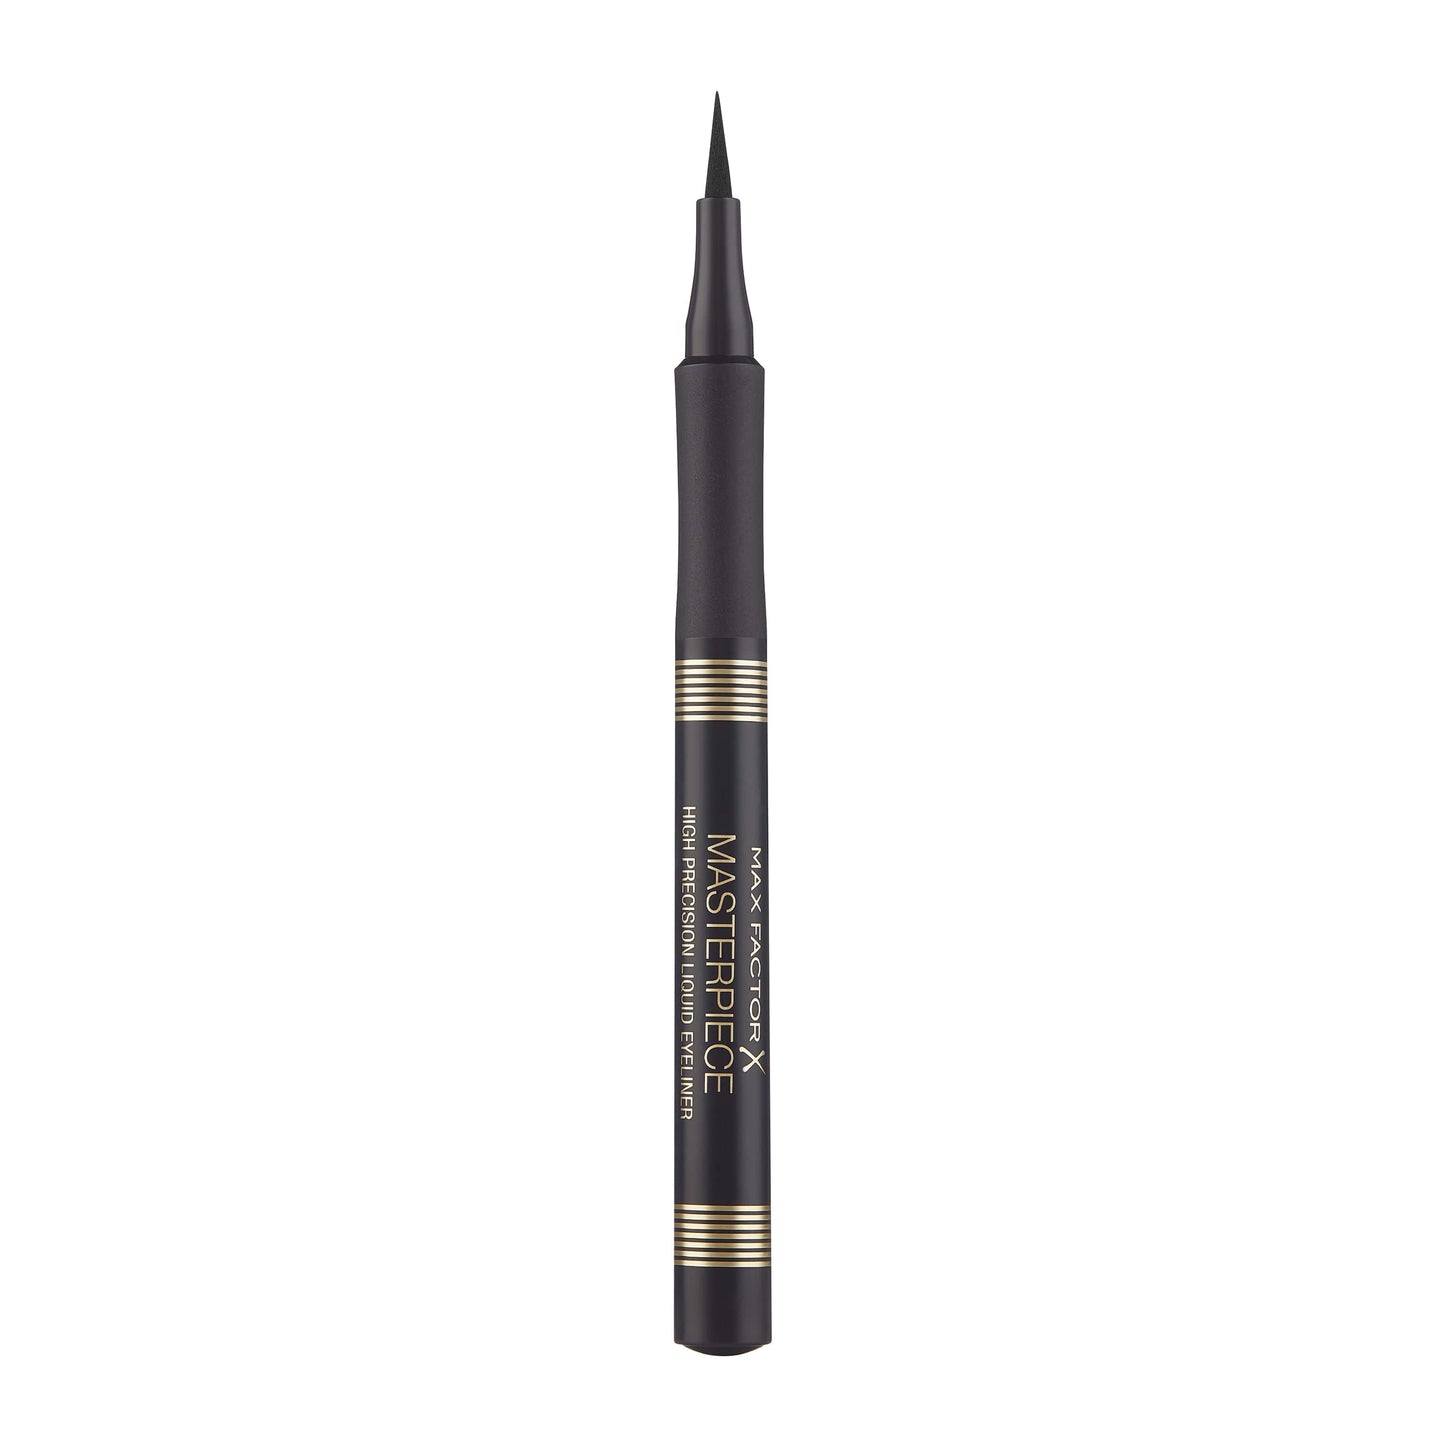 Max Factor - Eyeliner Penna Masterpiece High Precision - Punta a Spatola per Tratto Spesso e Sottile - 01 Black - 1 g